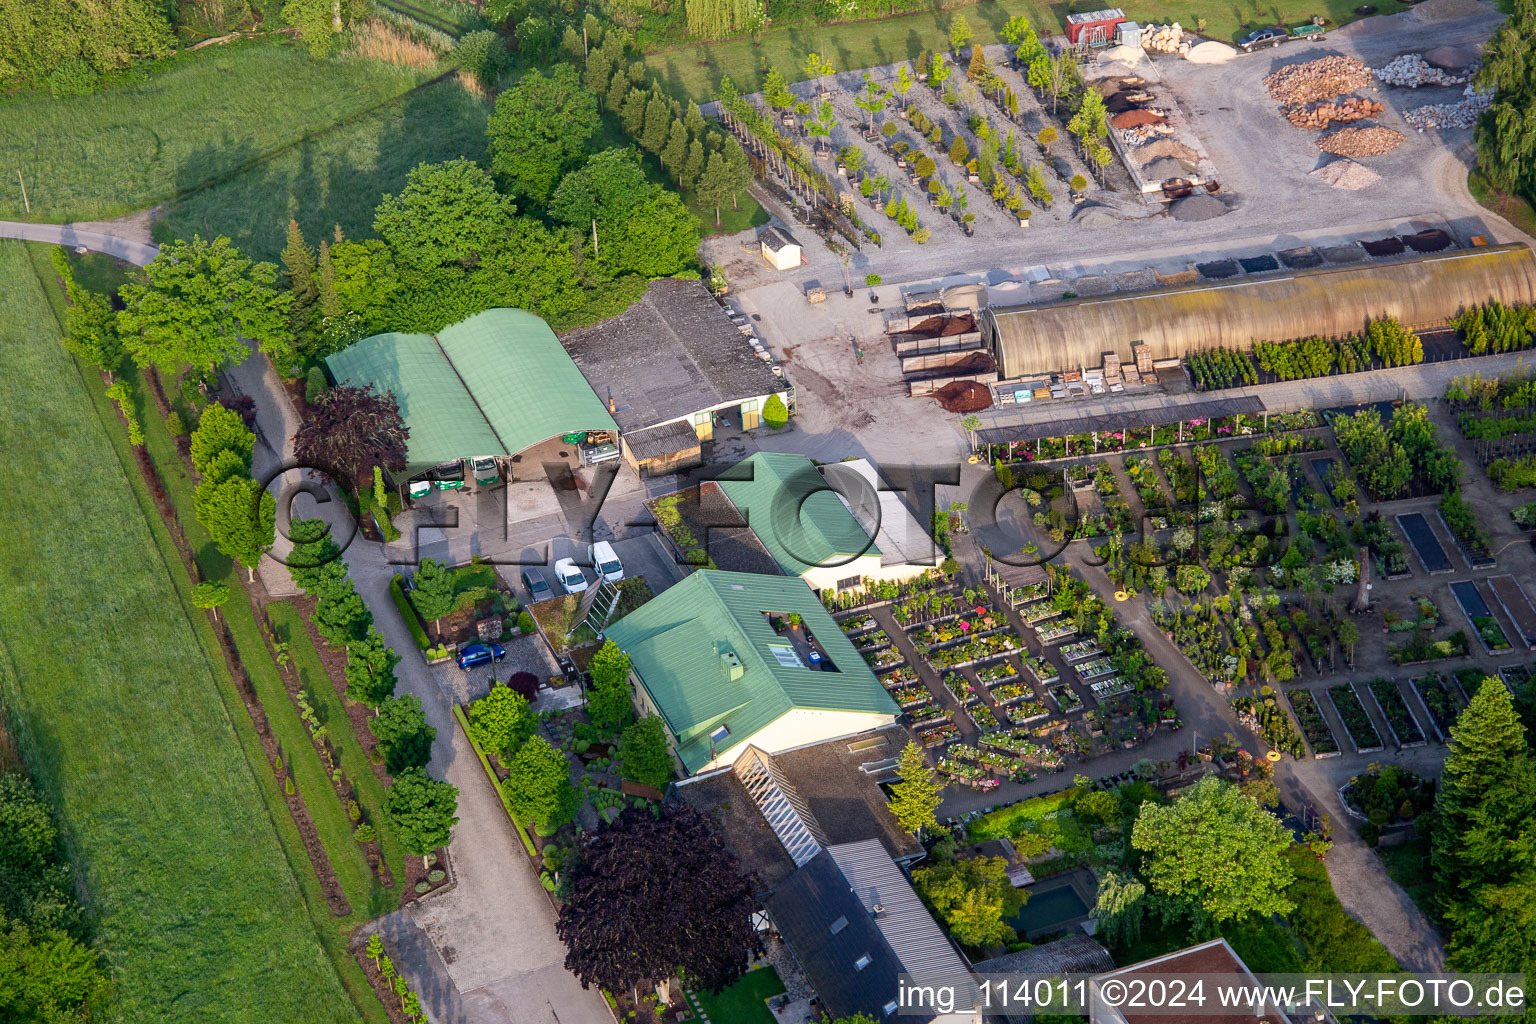 Building of Store plant market Bienwald-Nursery Greentec GmbH in Berg (Pfalz) in the state Rhineland-Palatinate, Germany